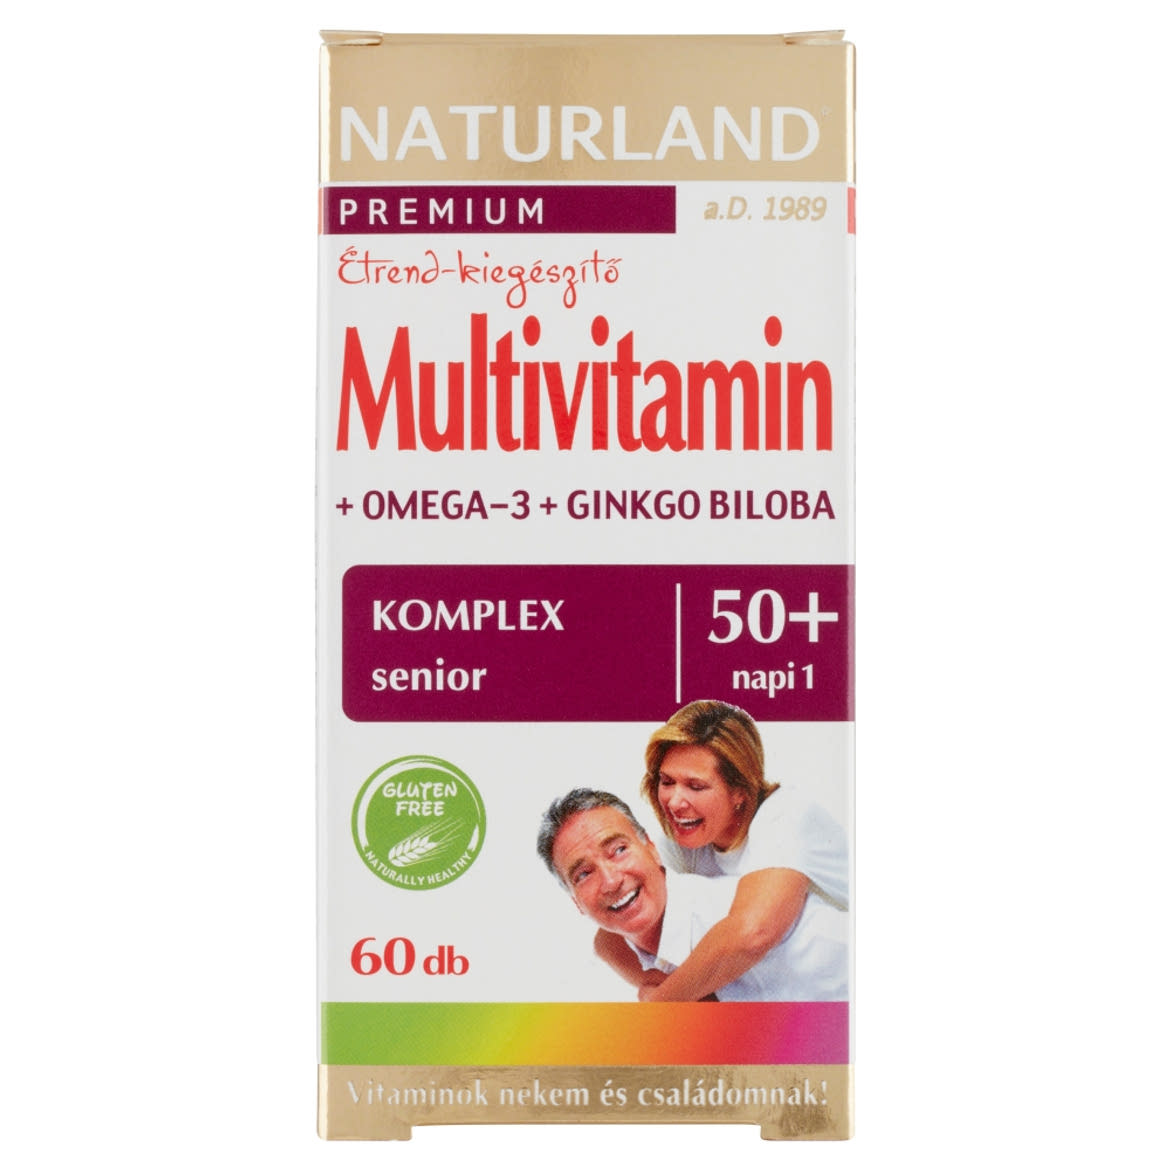 Naturland Premium Multivitamin 50+ Omega-3 + Gingko Biloba étrend-kiegészítő kapszula